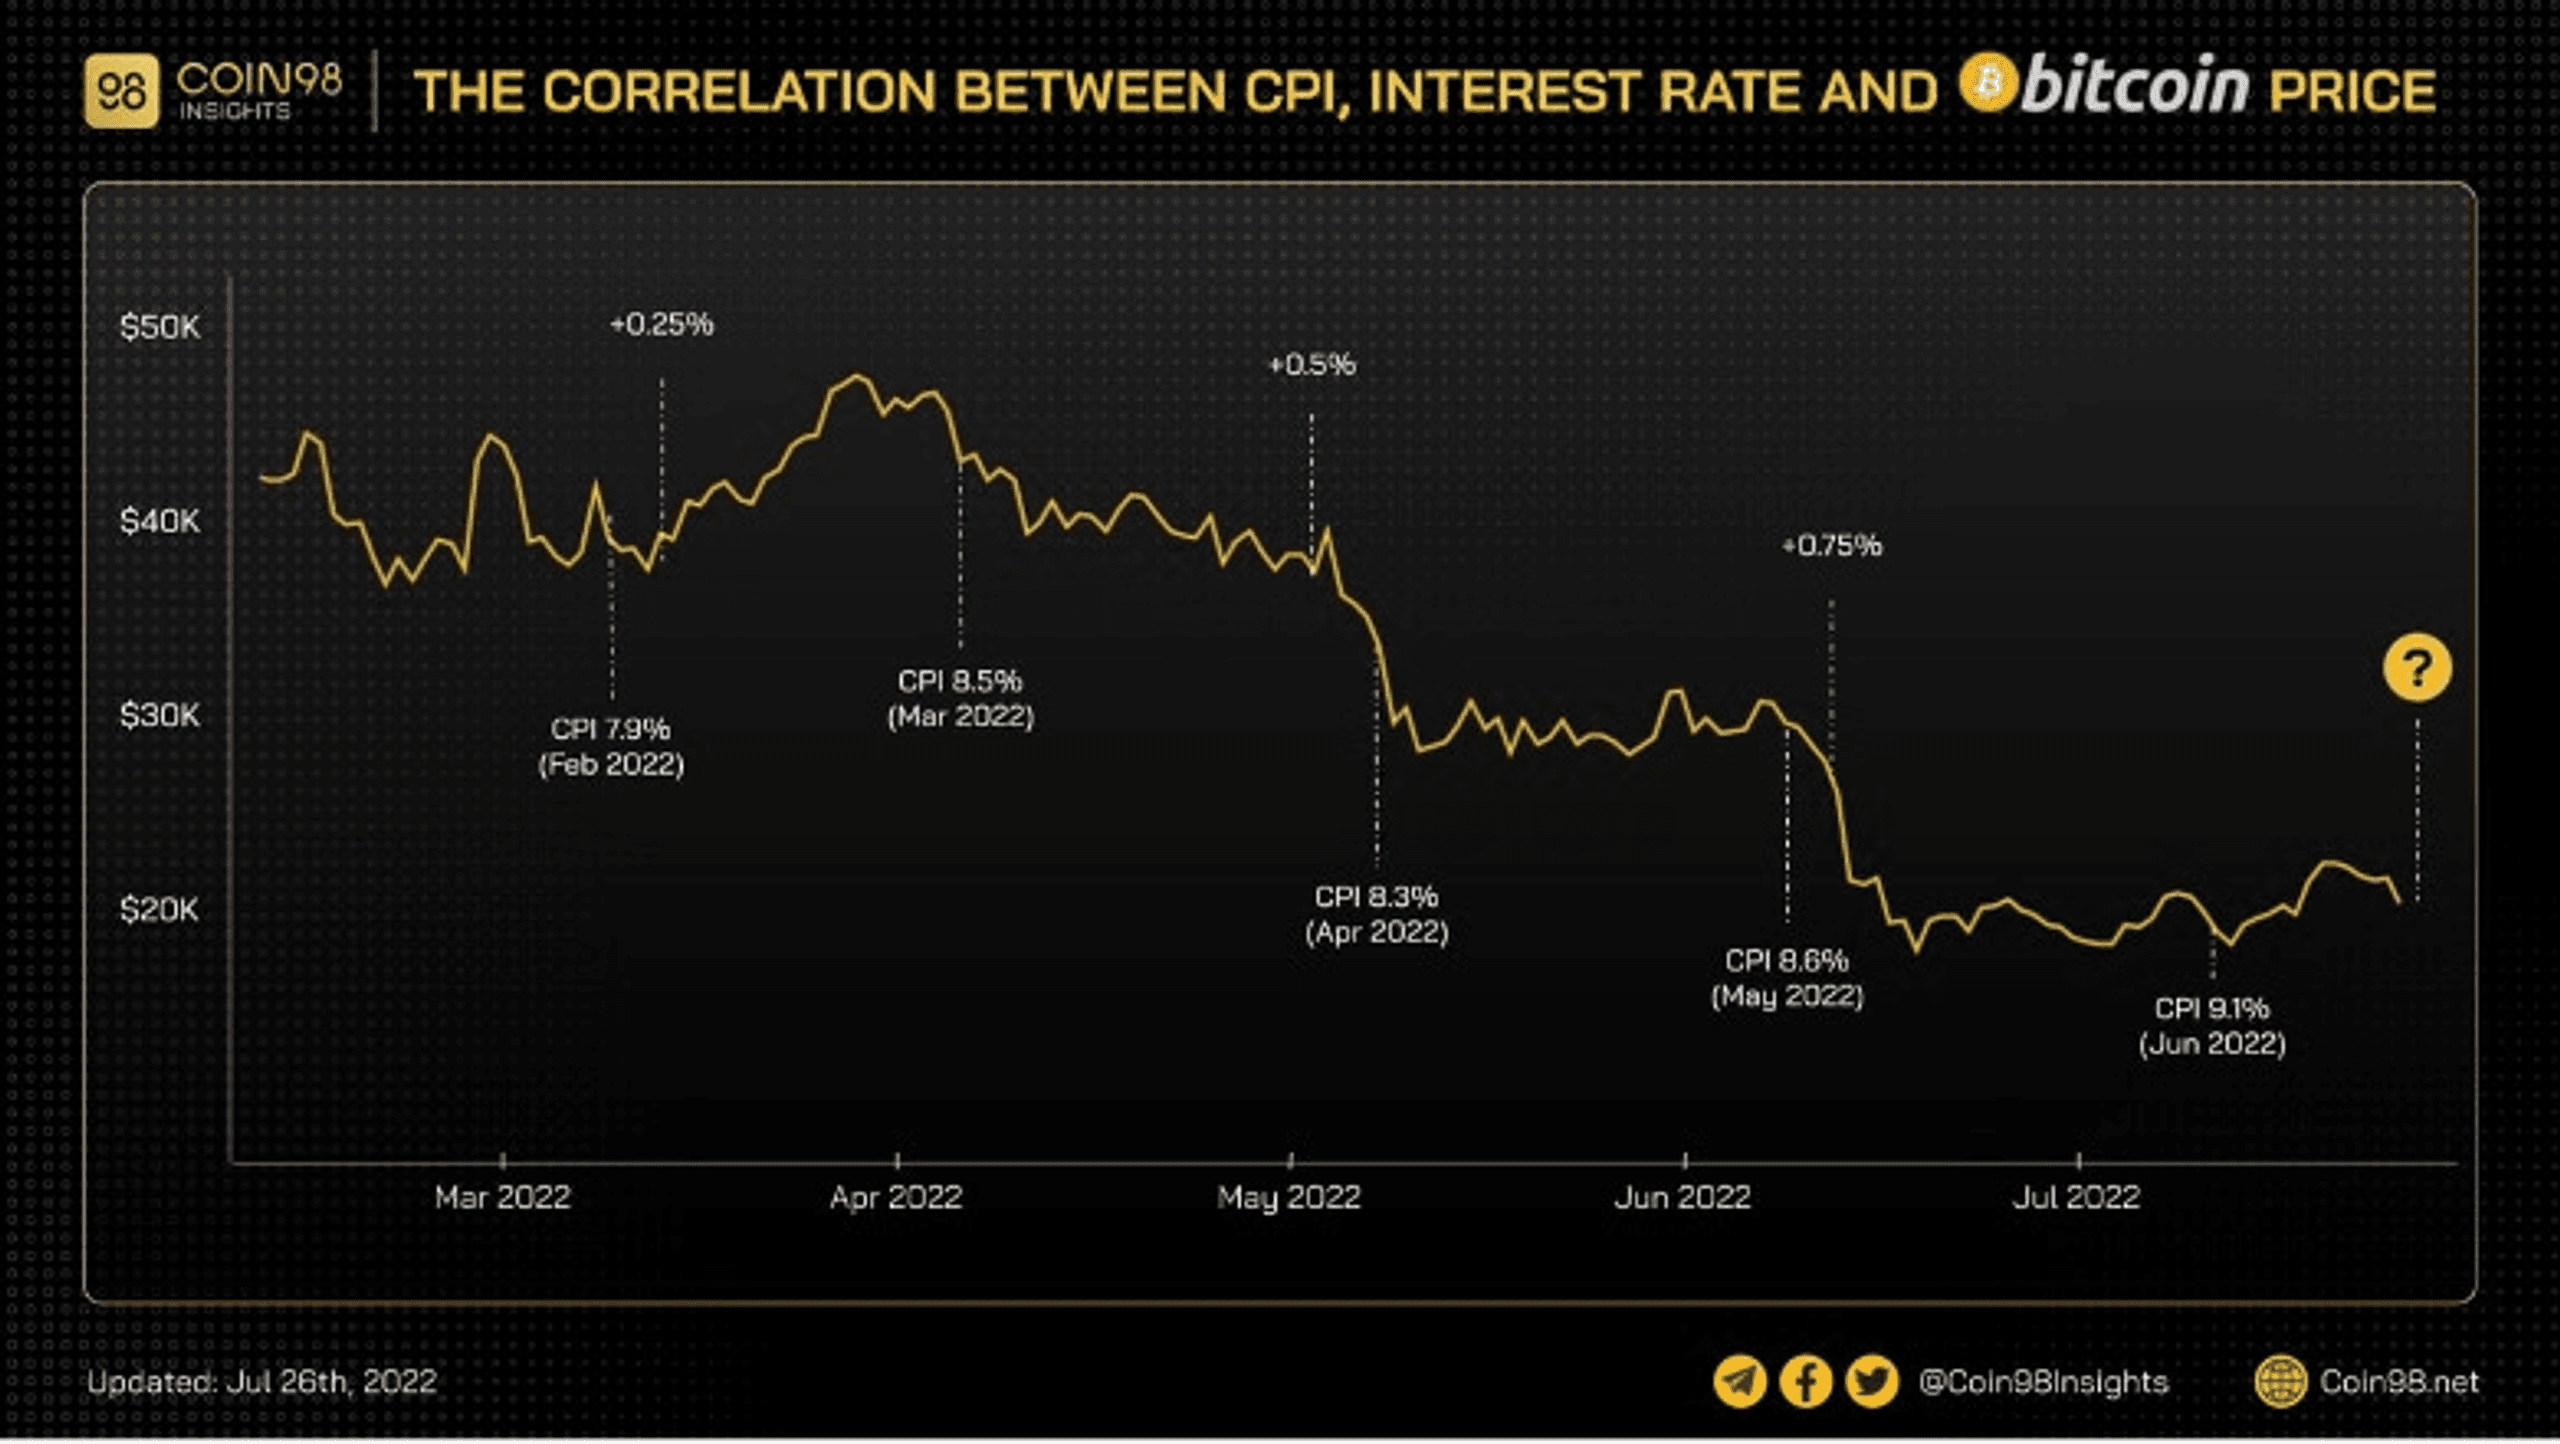 cpi interest rate and btc price